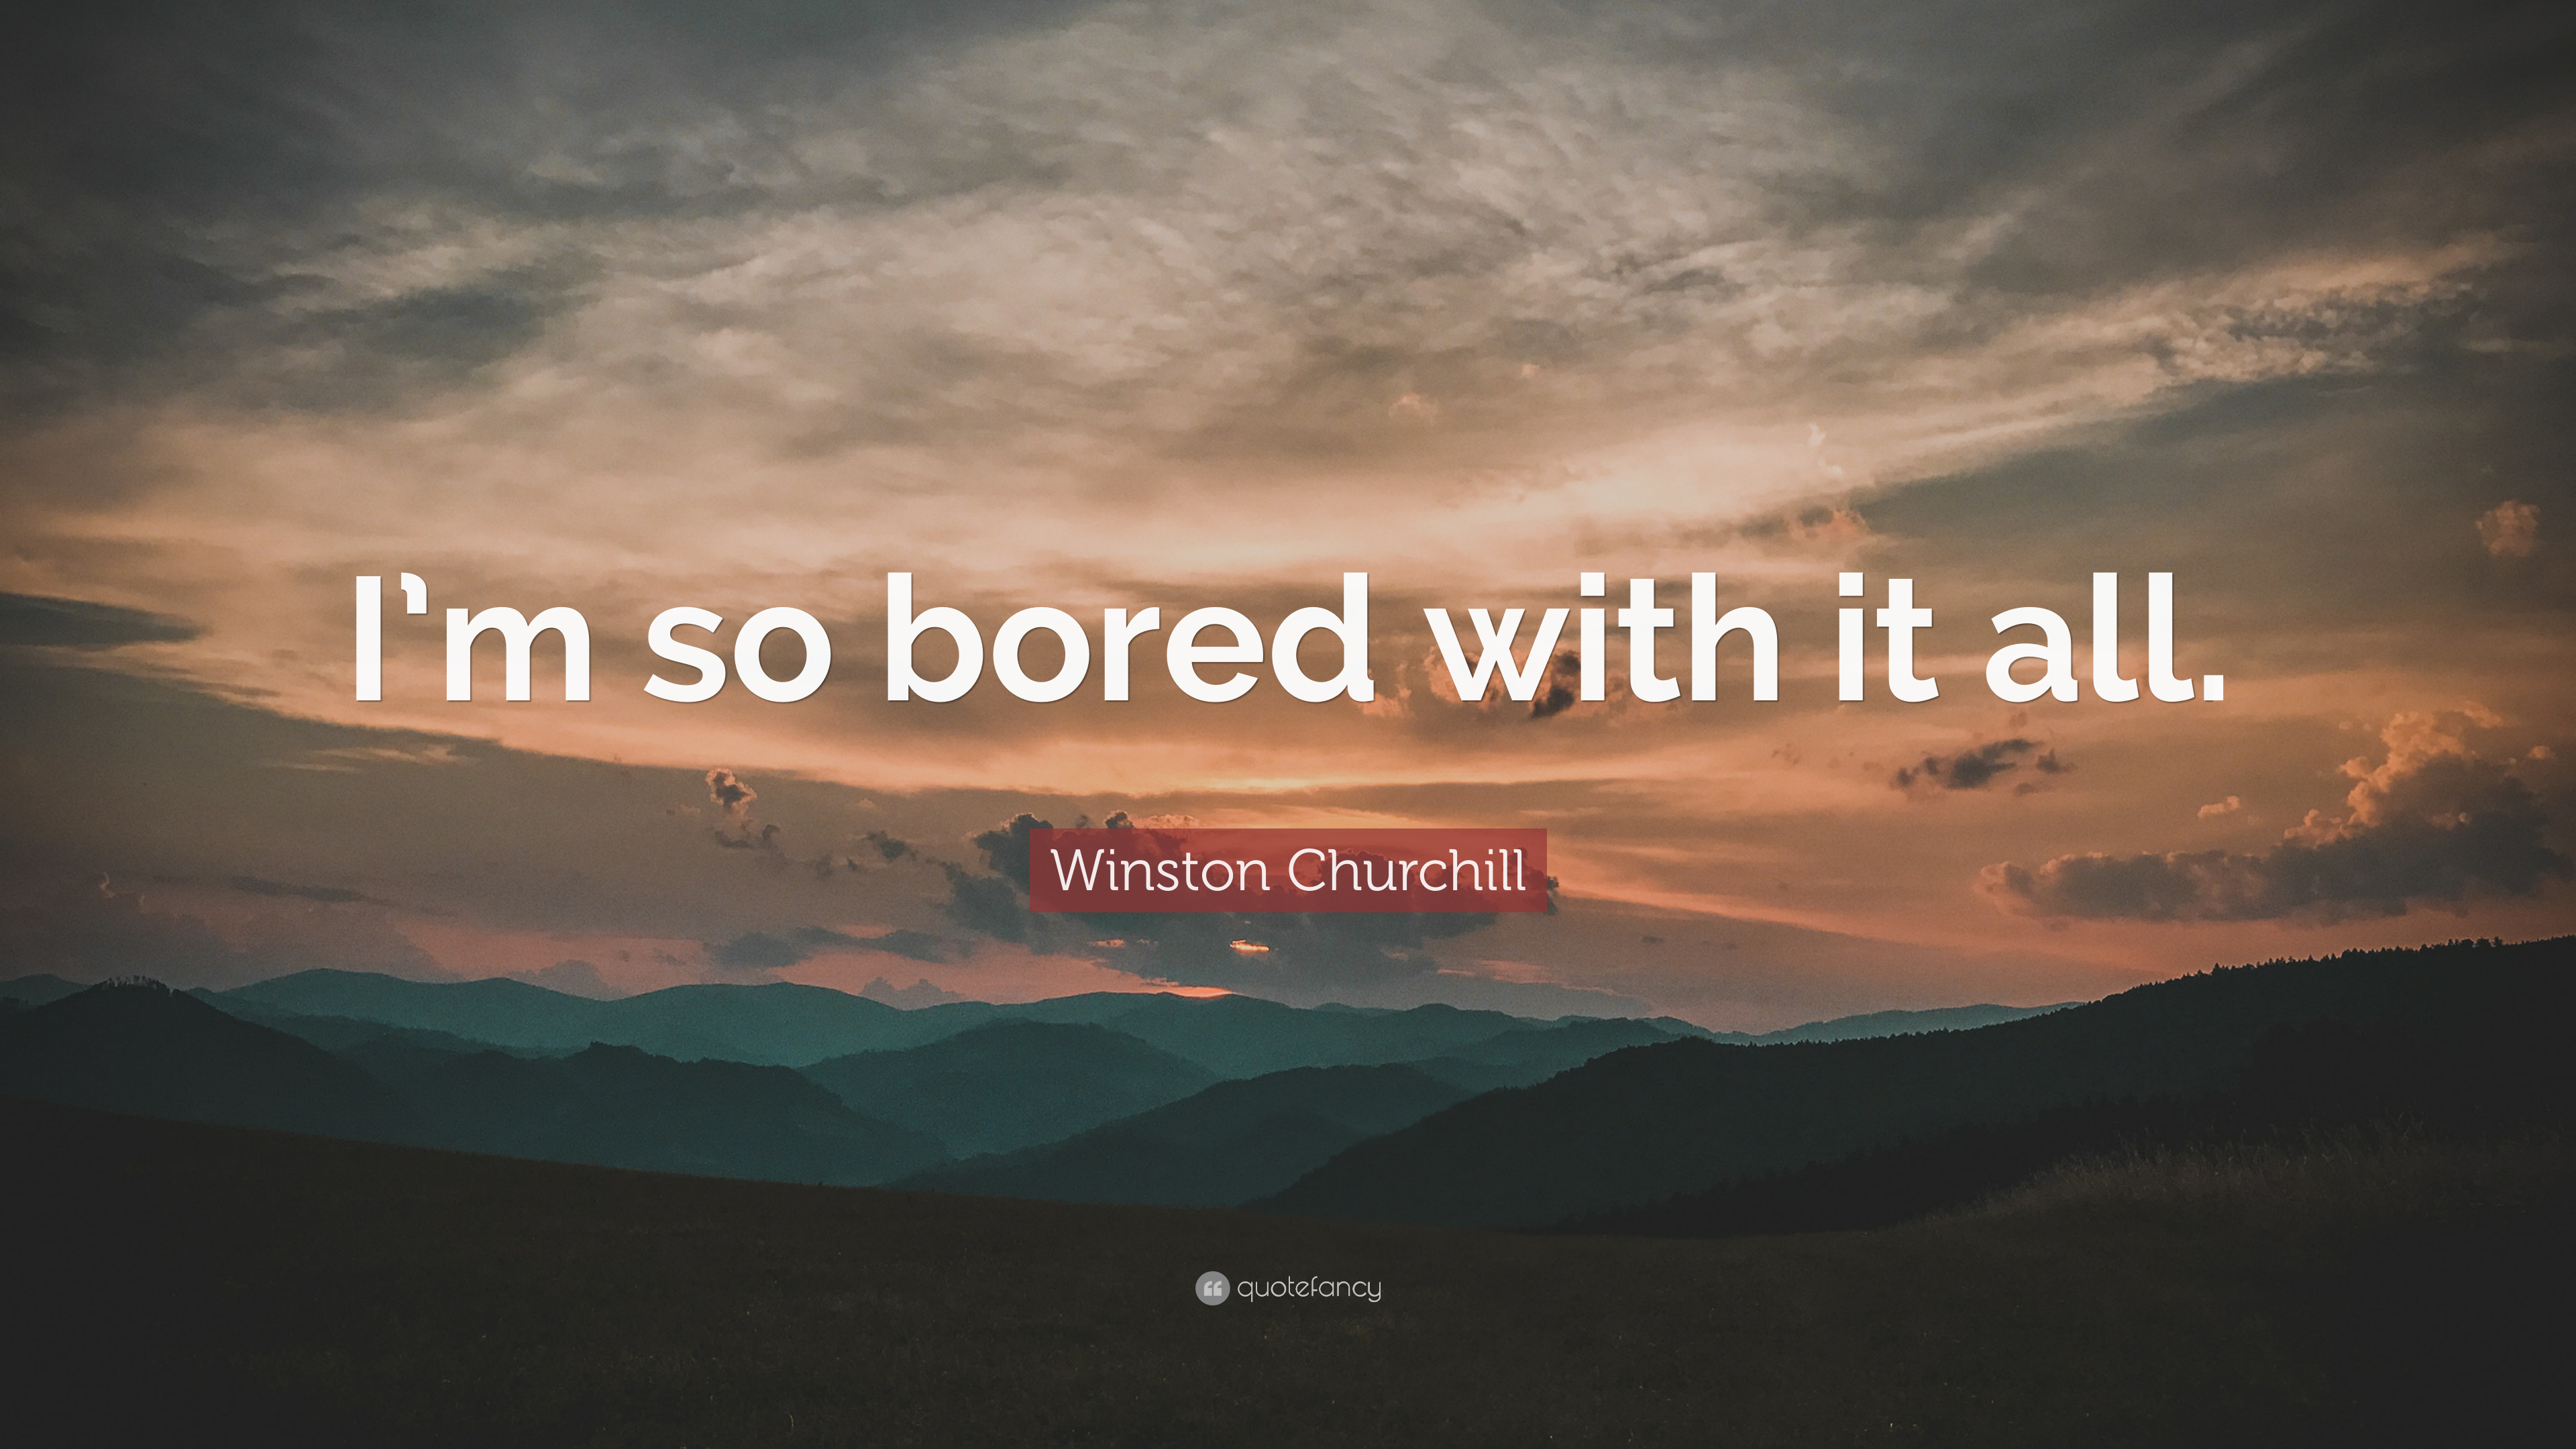 Winston Churchill Quote: “I'm so bored with it all.”